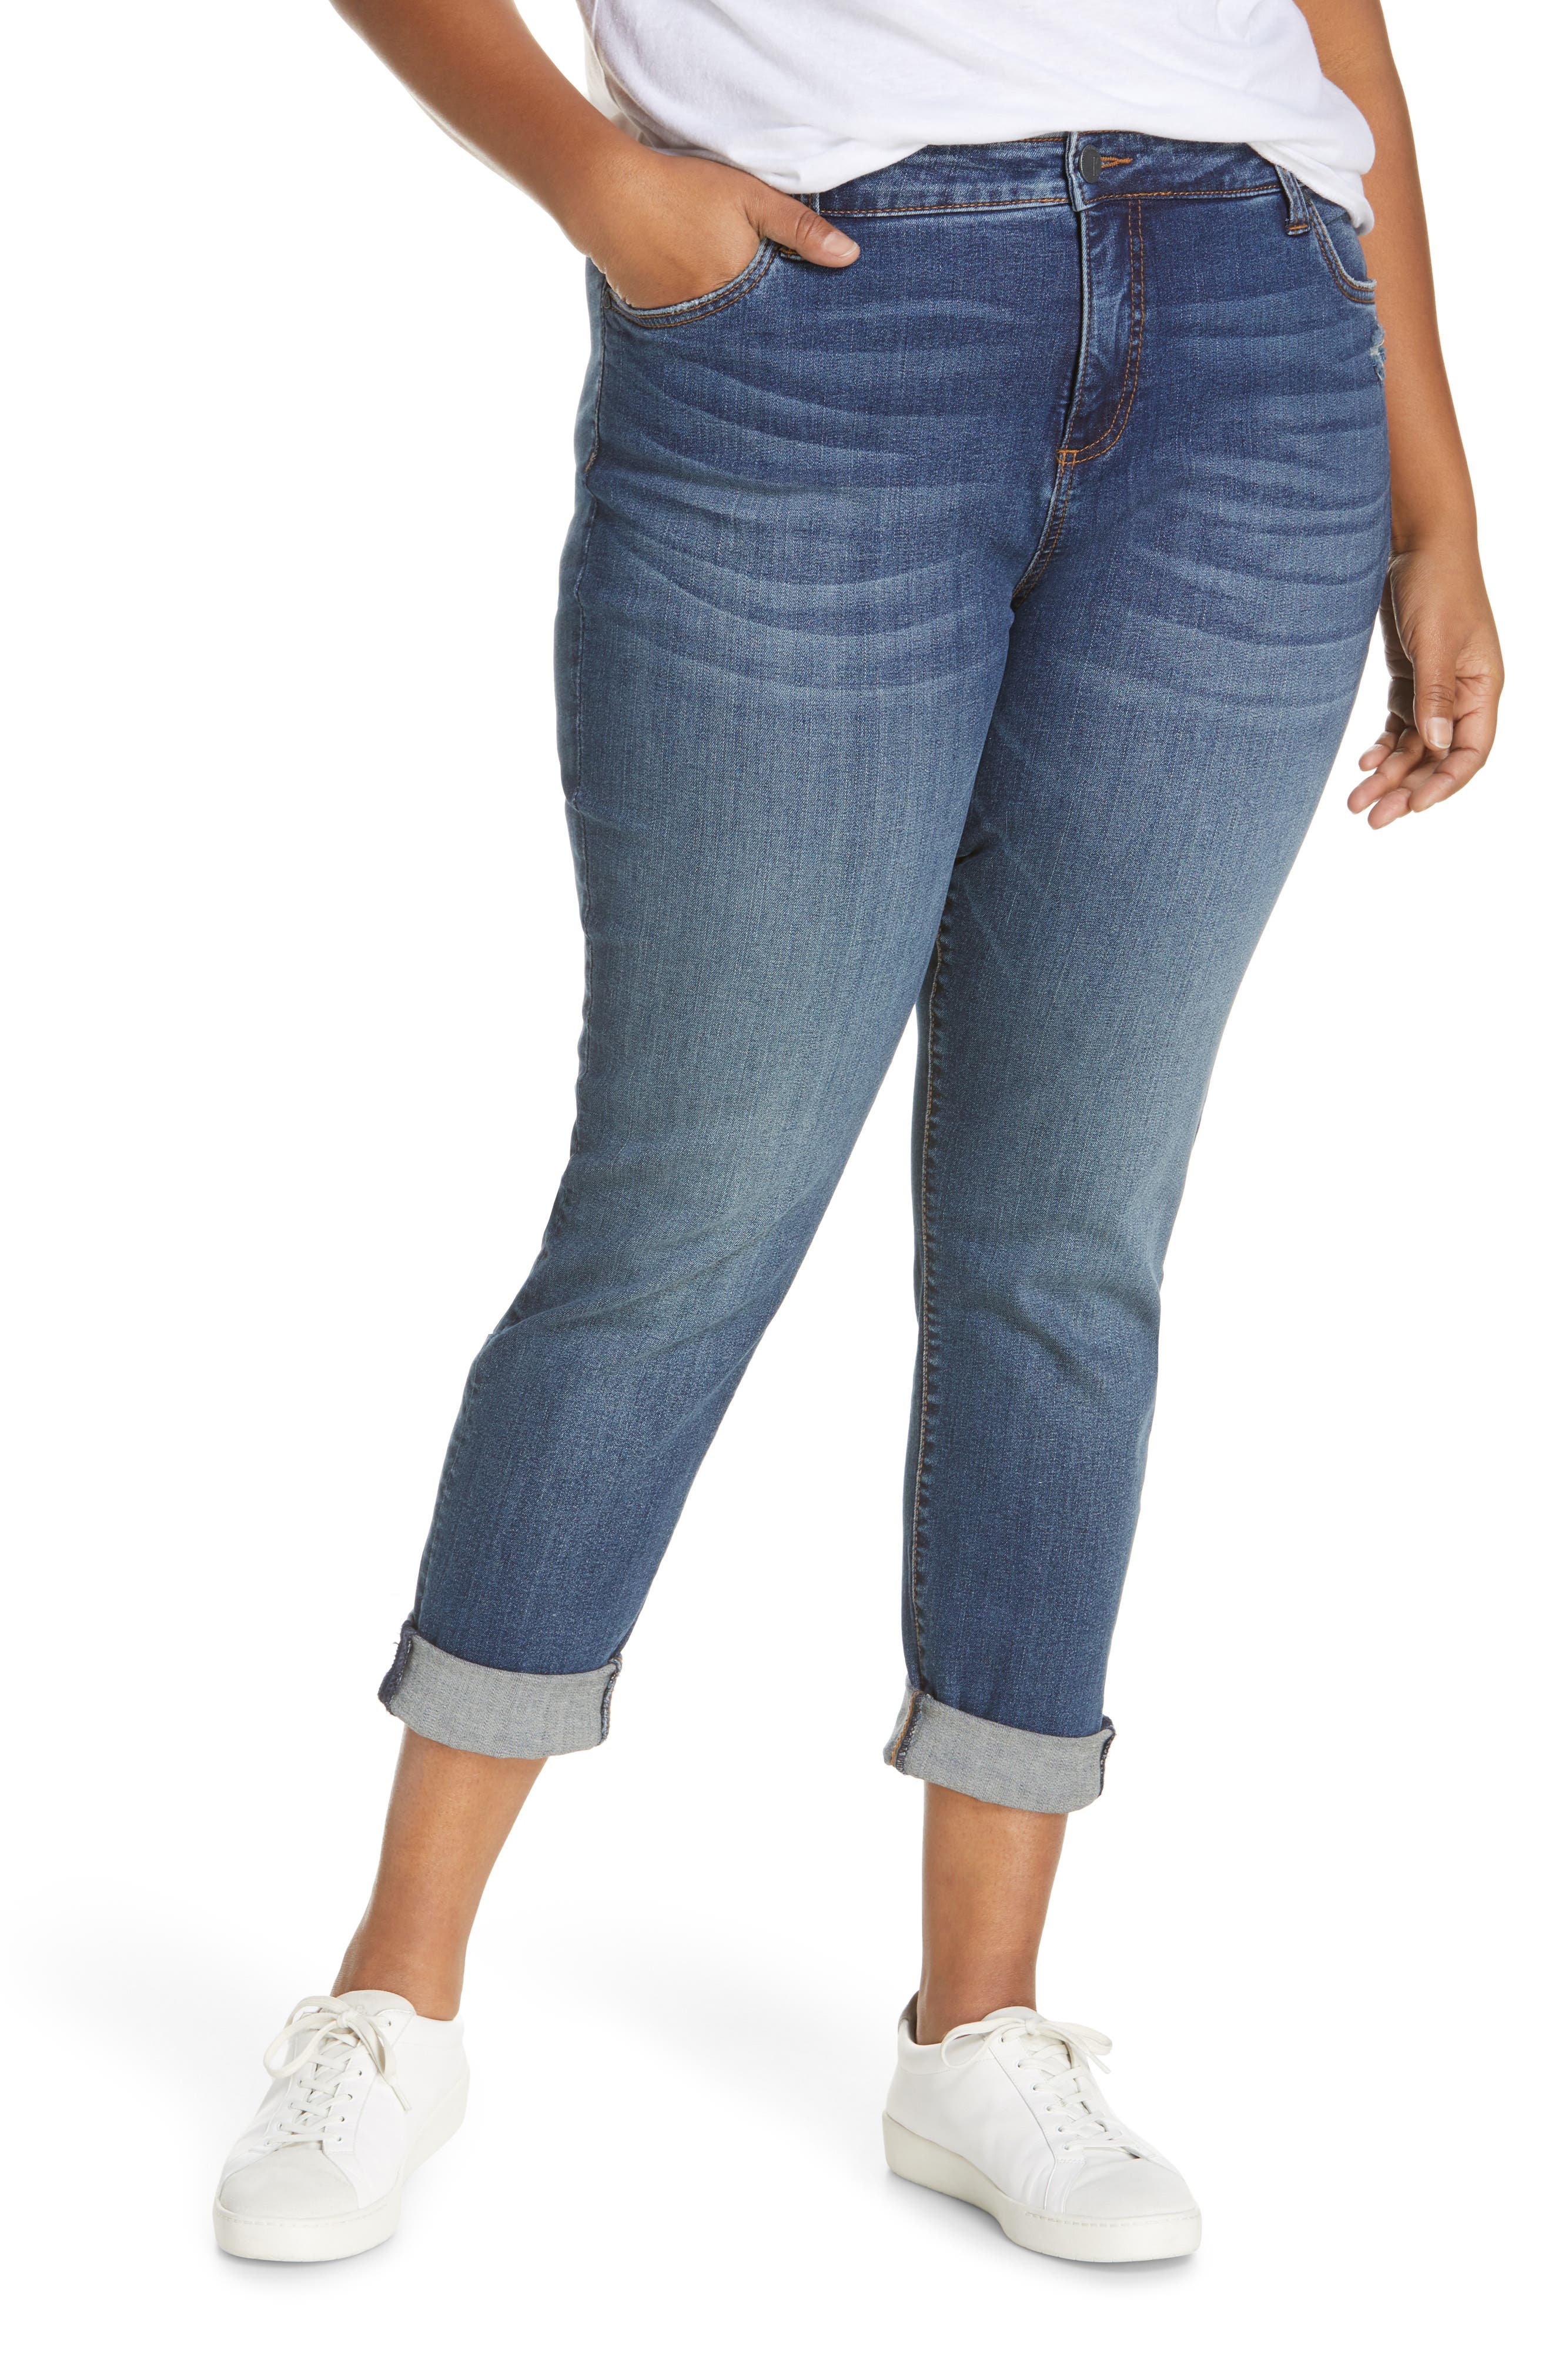 stretch jeans womens plus size